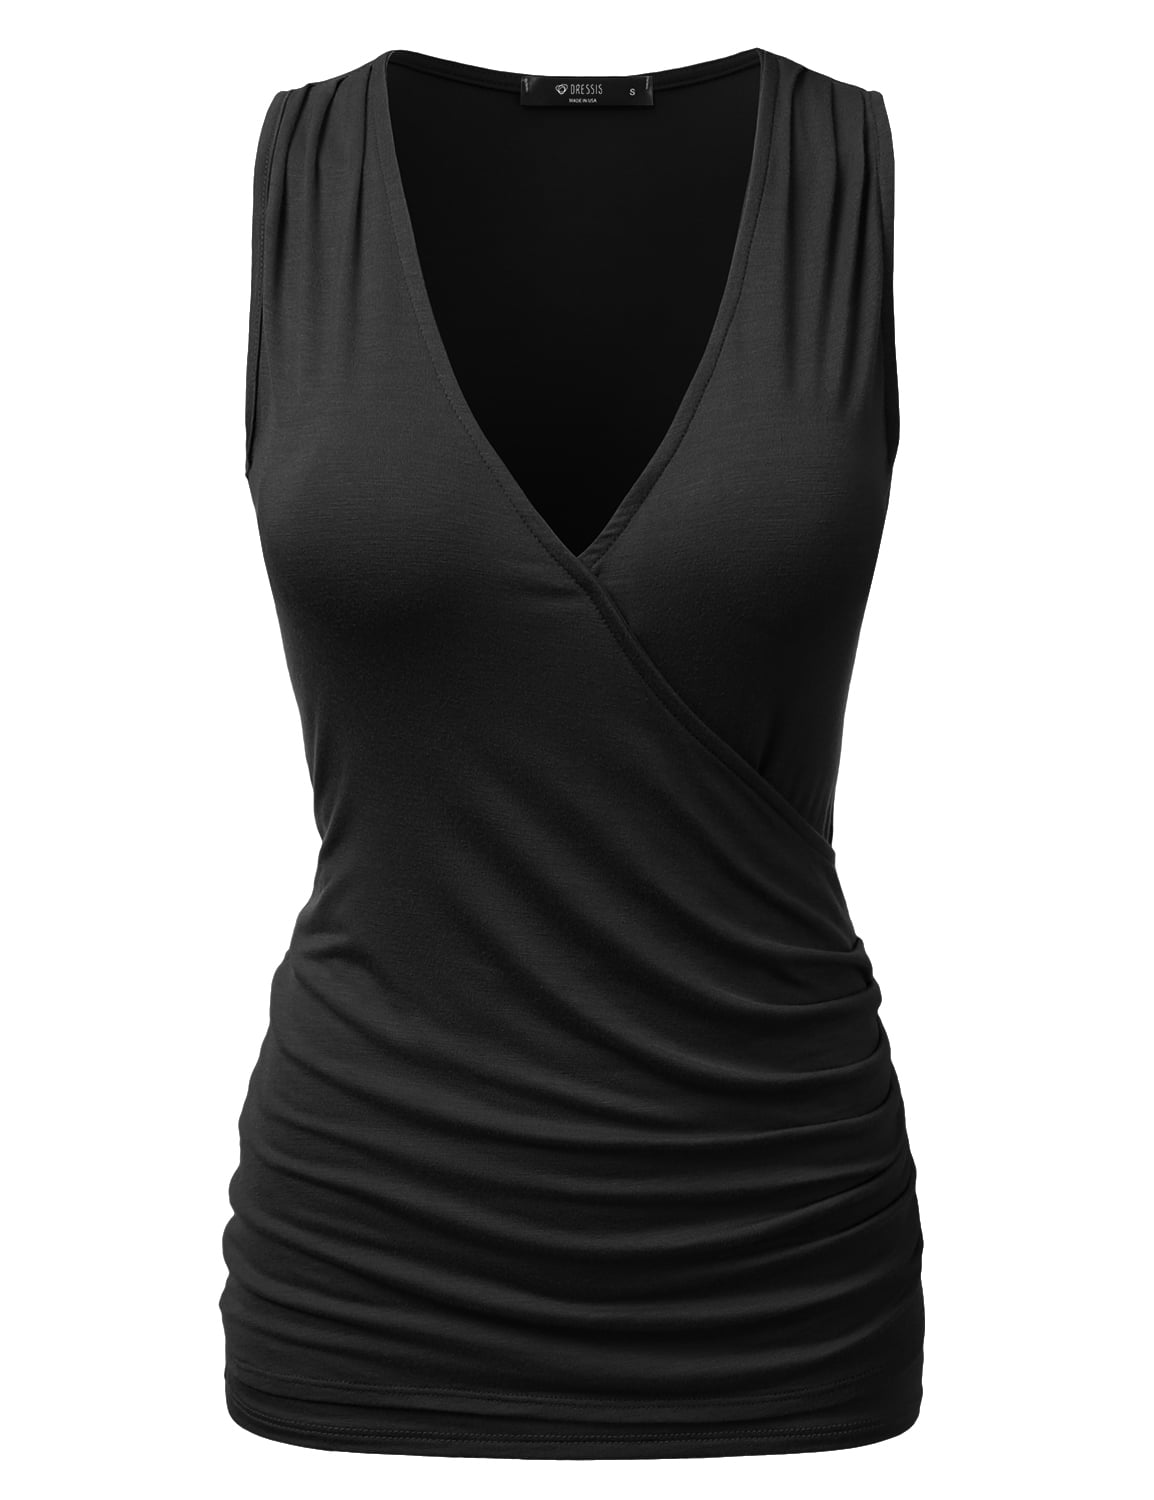 Doublju Women's V- Neck Sleeveless Shirred Sides Tank Top (Plus Size ...